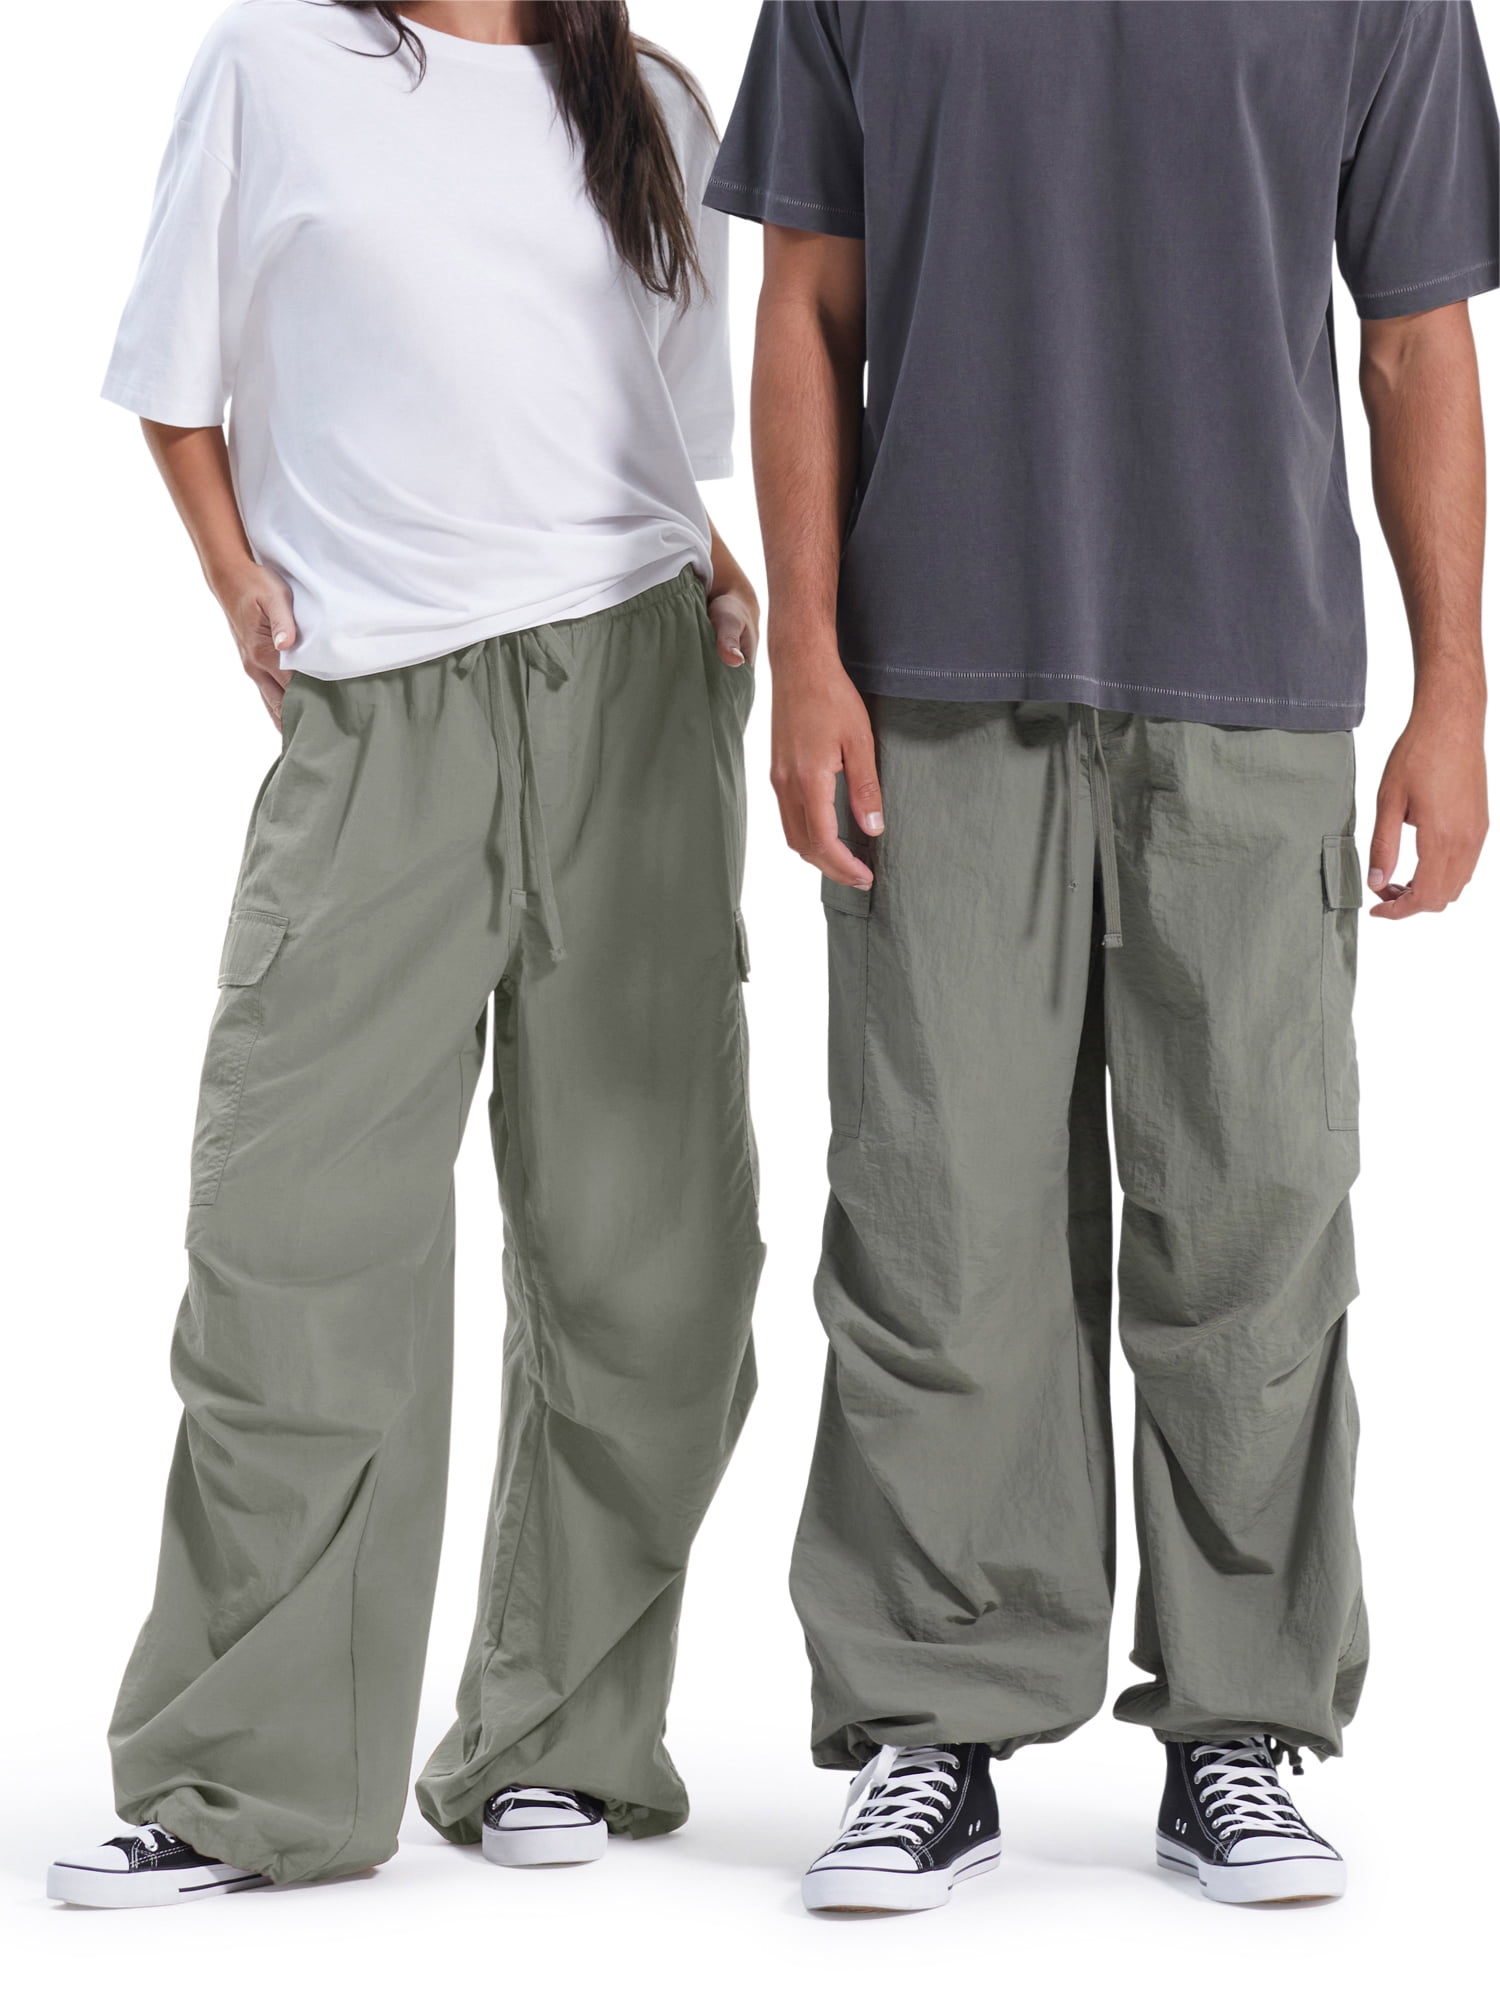 No Boundaries All Gender Parachute Pants, Men's Sizes XS - 3XL